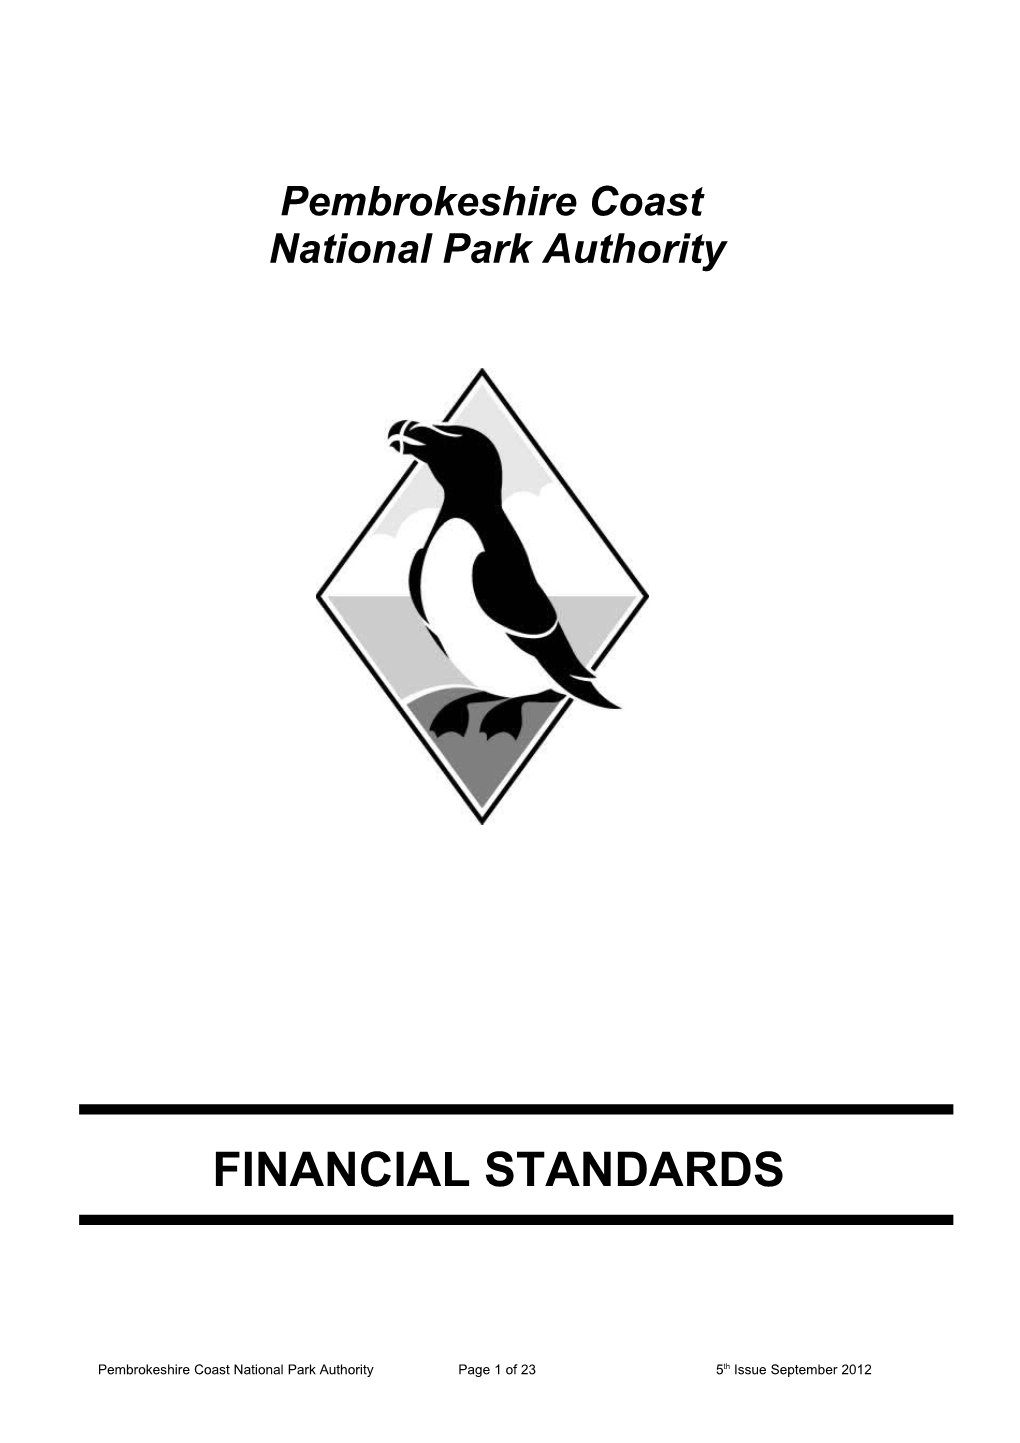 National Park Authority